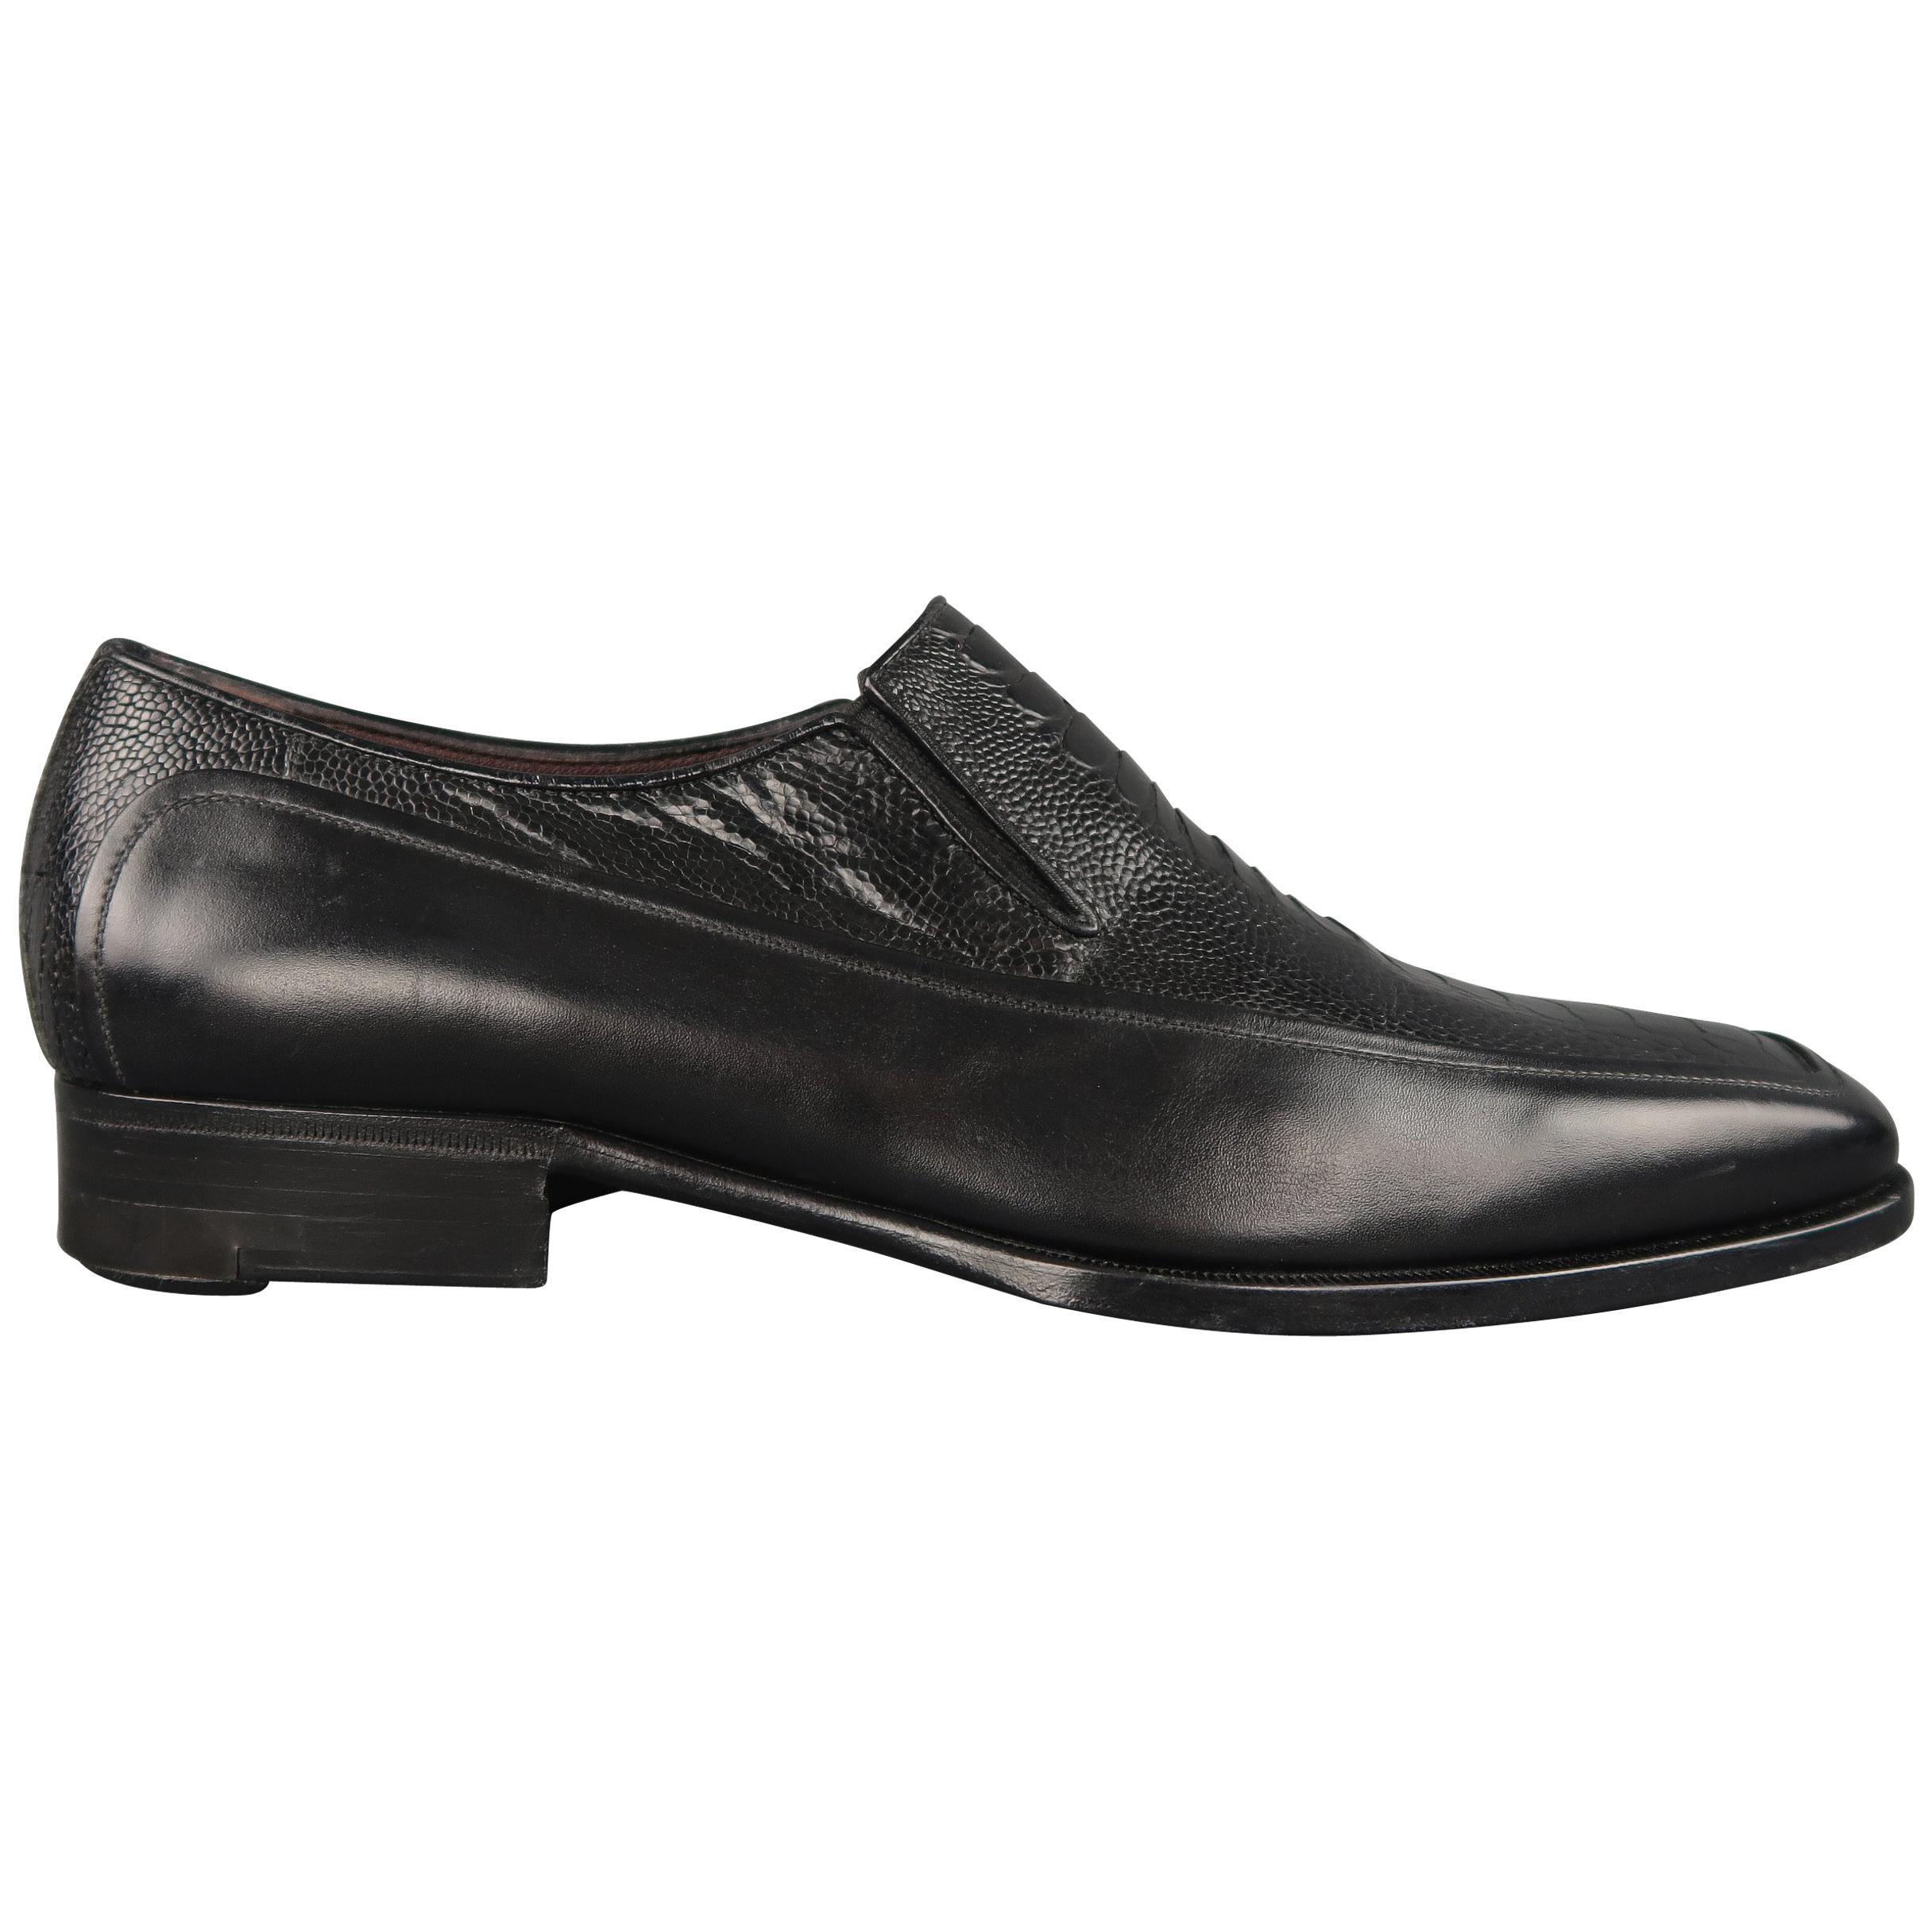 A.Testoni Dress Shoes / Black Lizard Leather Panel Dress Loafers